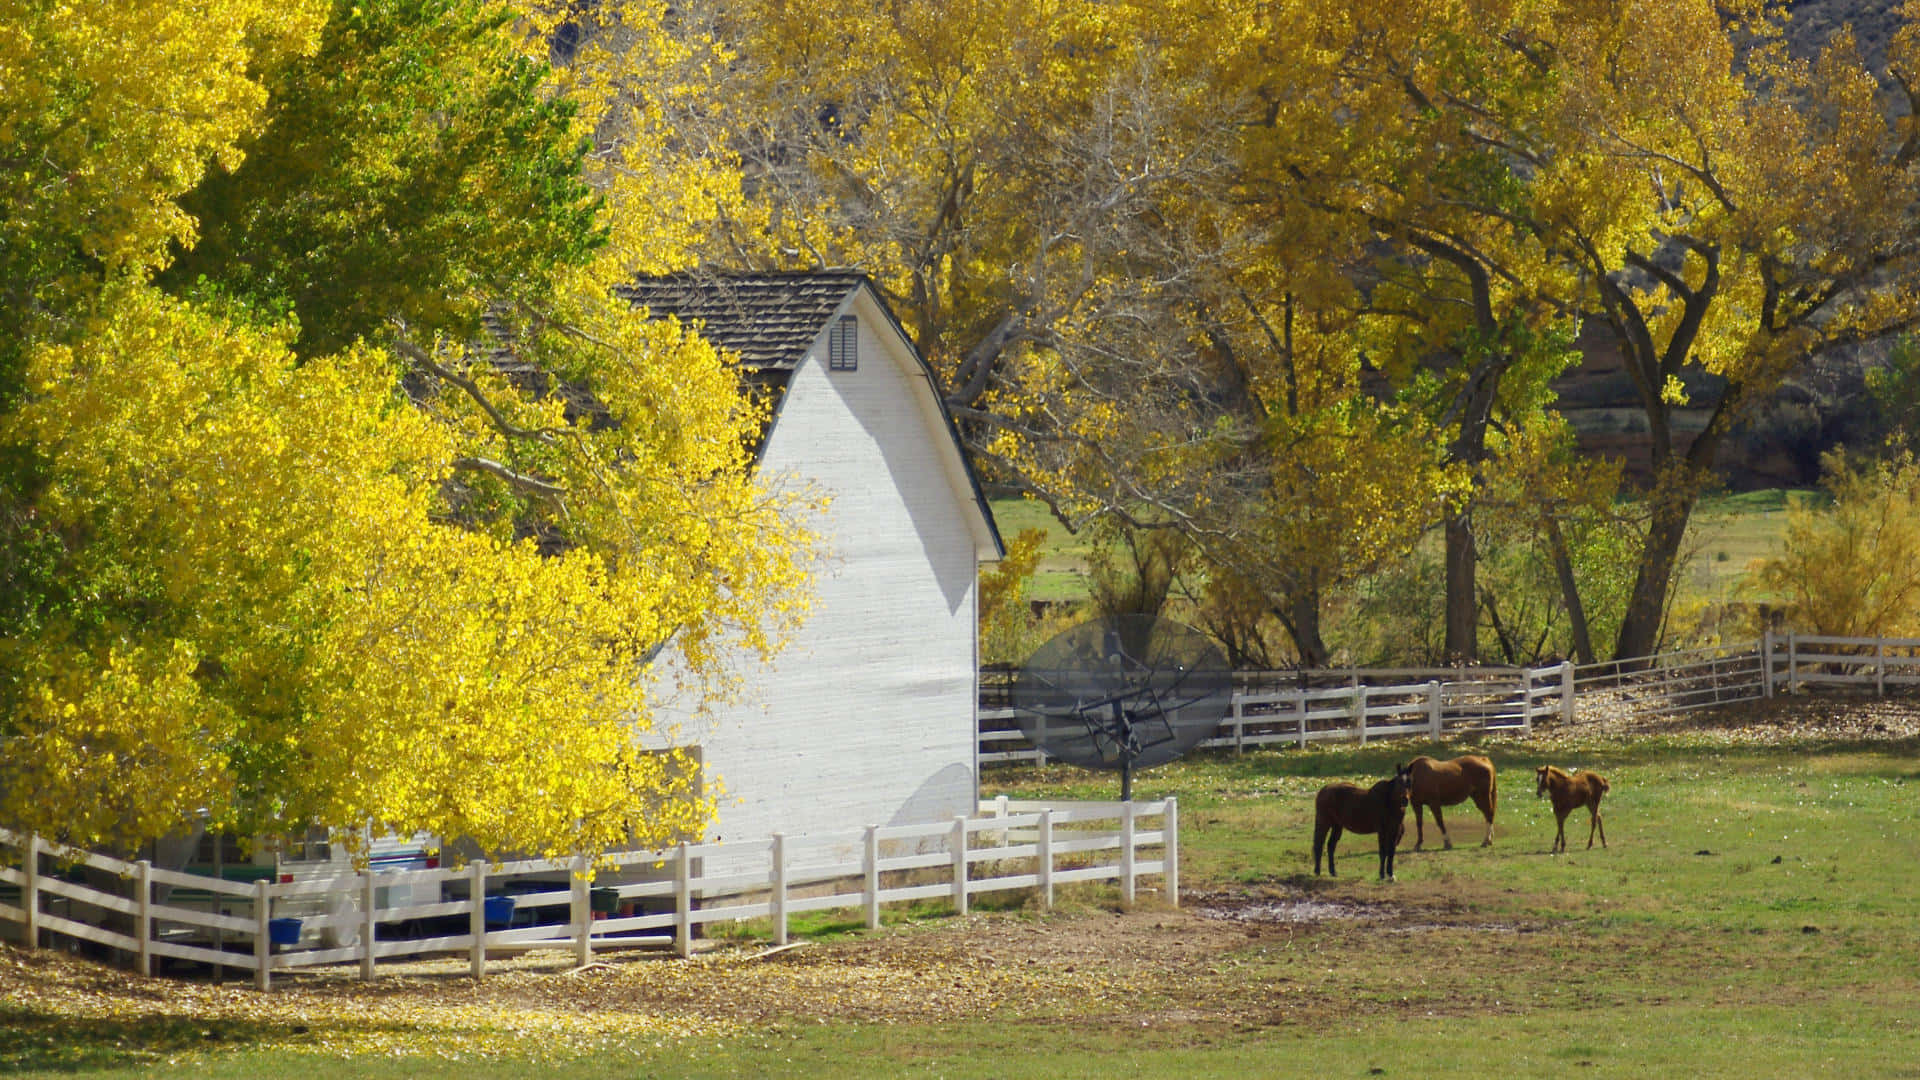 Fall Country Scenic Landscape Wallpaper